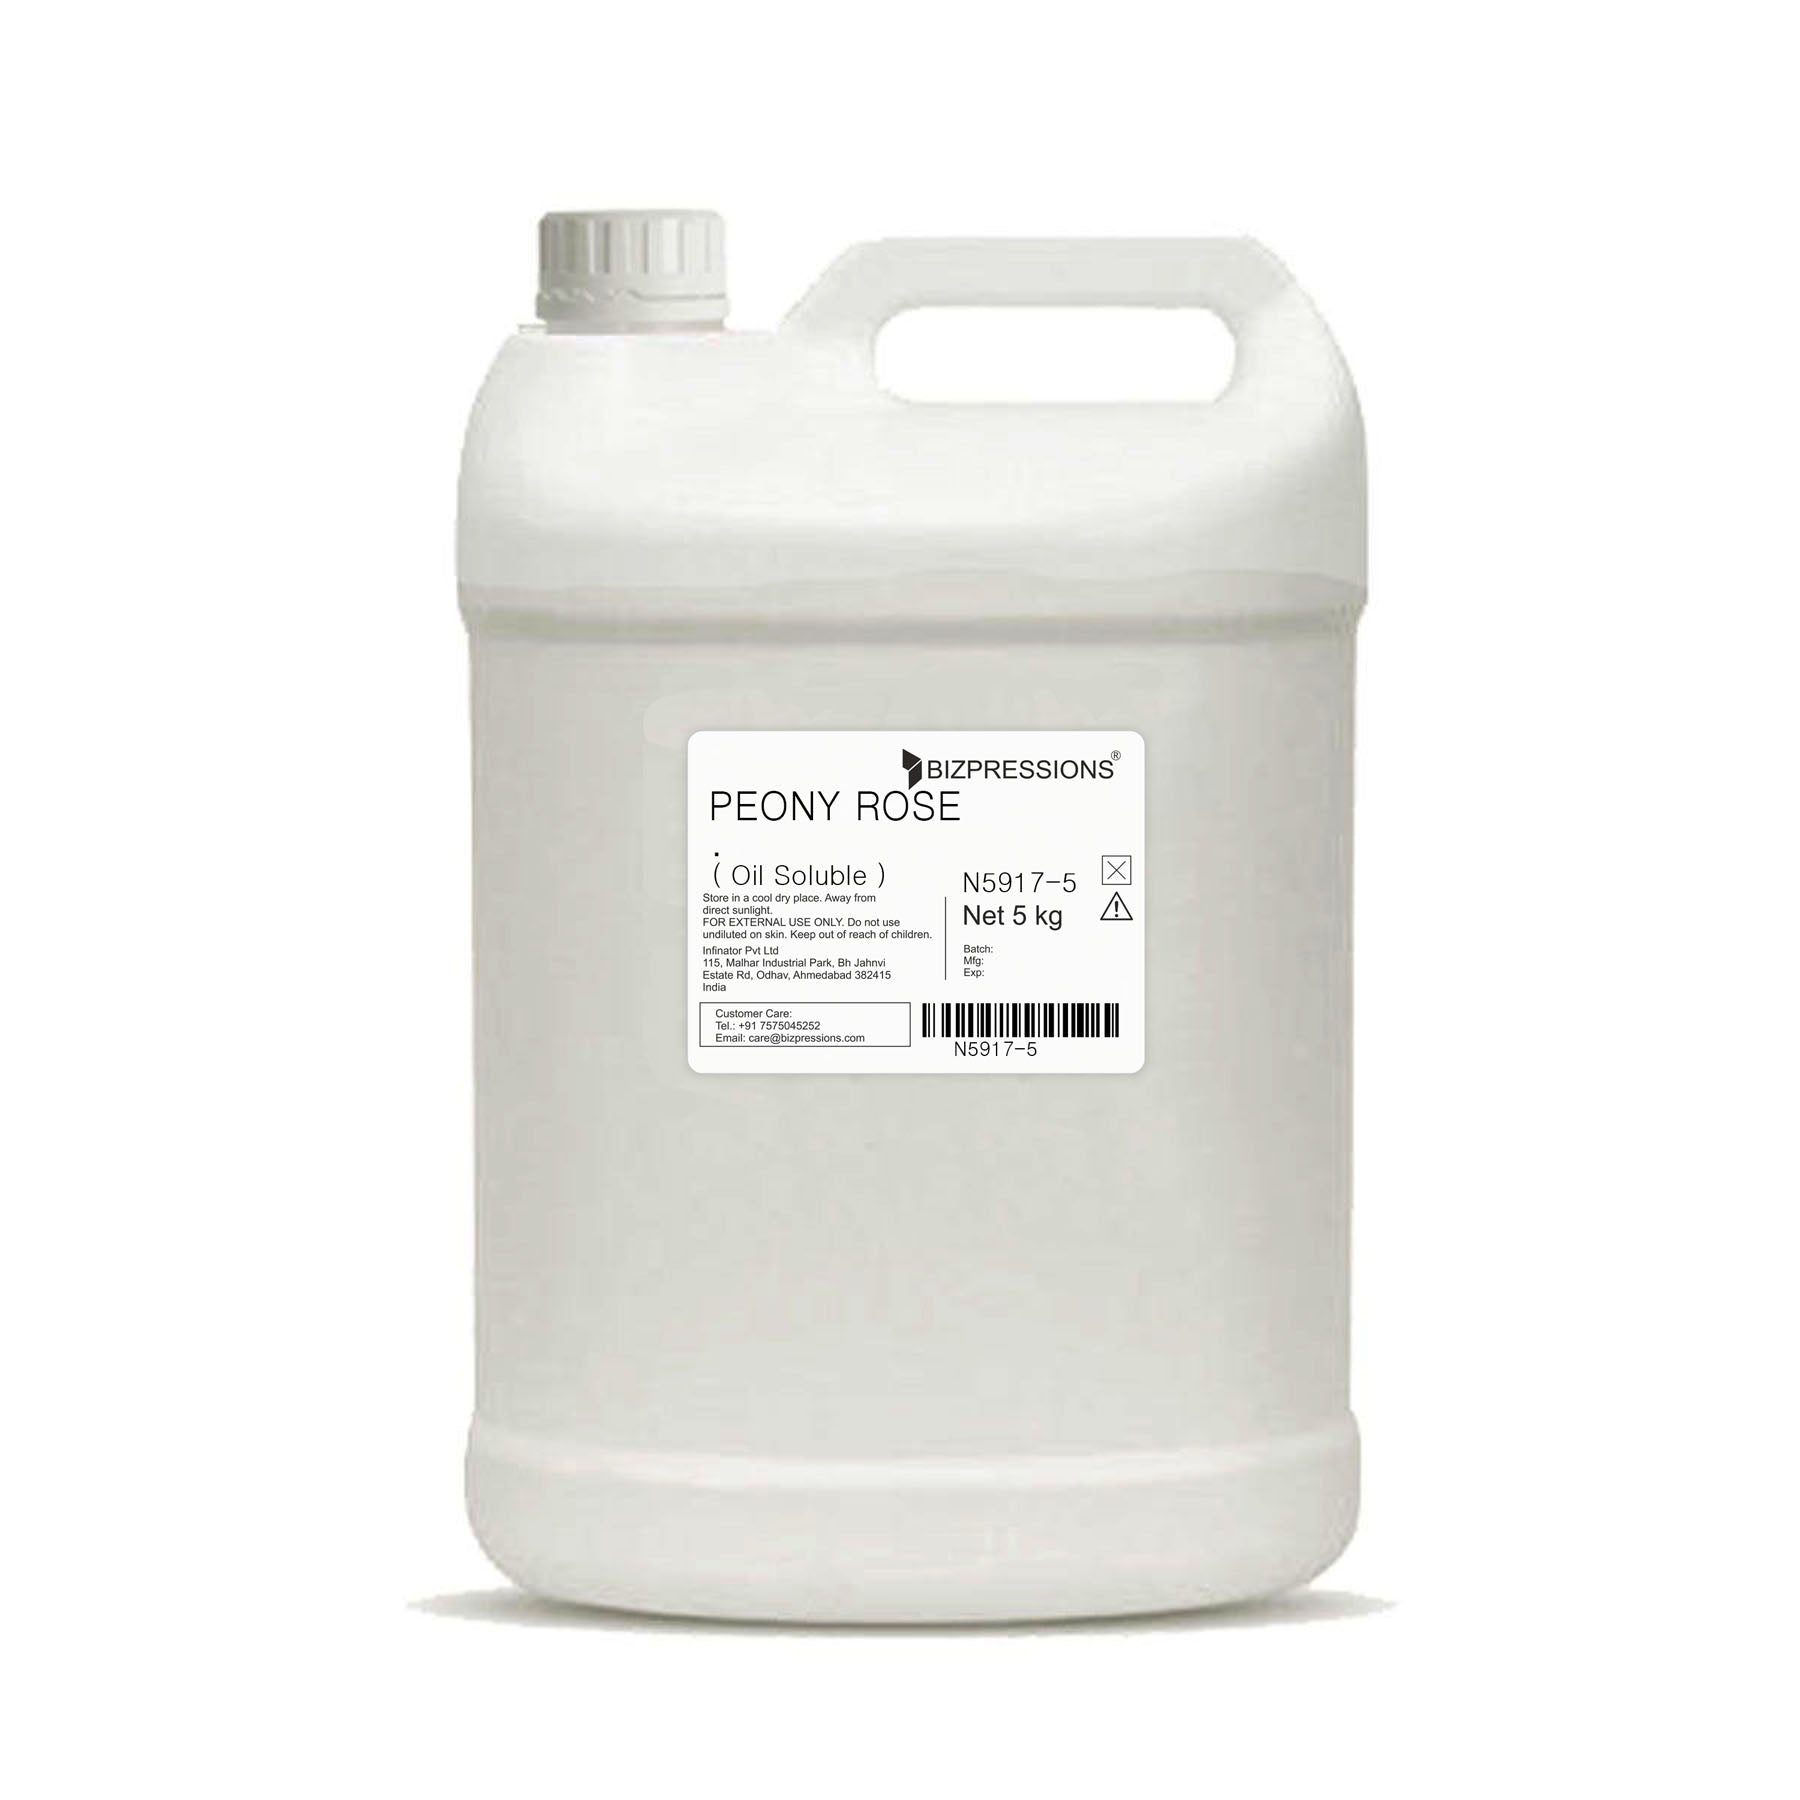 PEONY ROSE - Fragrance ( Oil Soluble ) - 5 kg